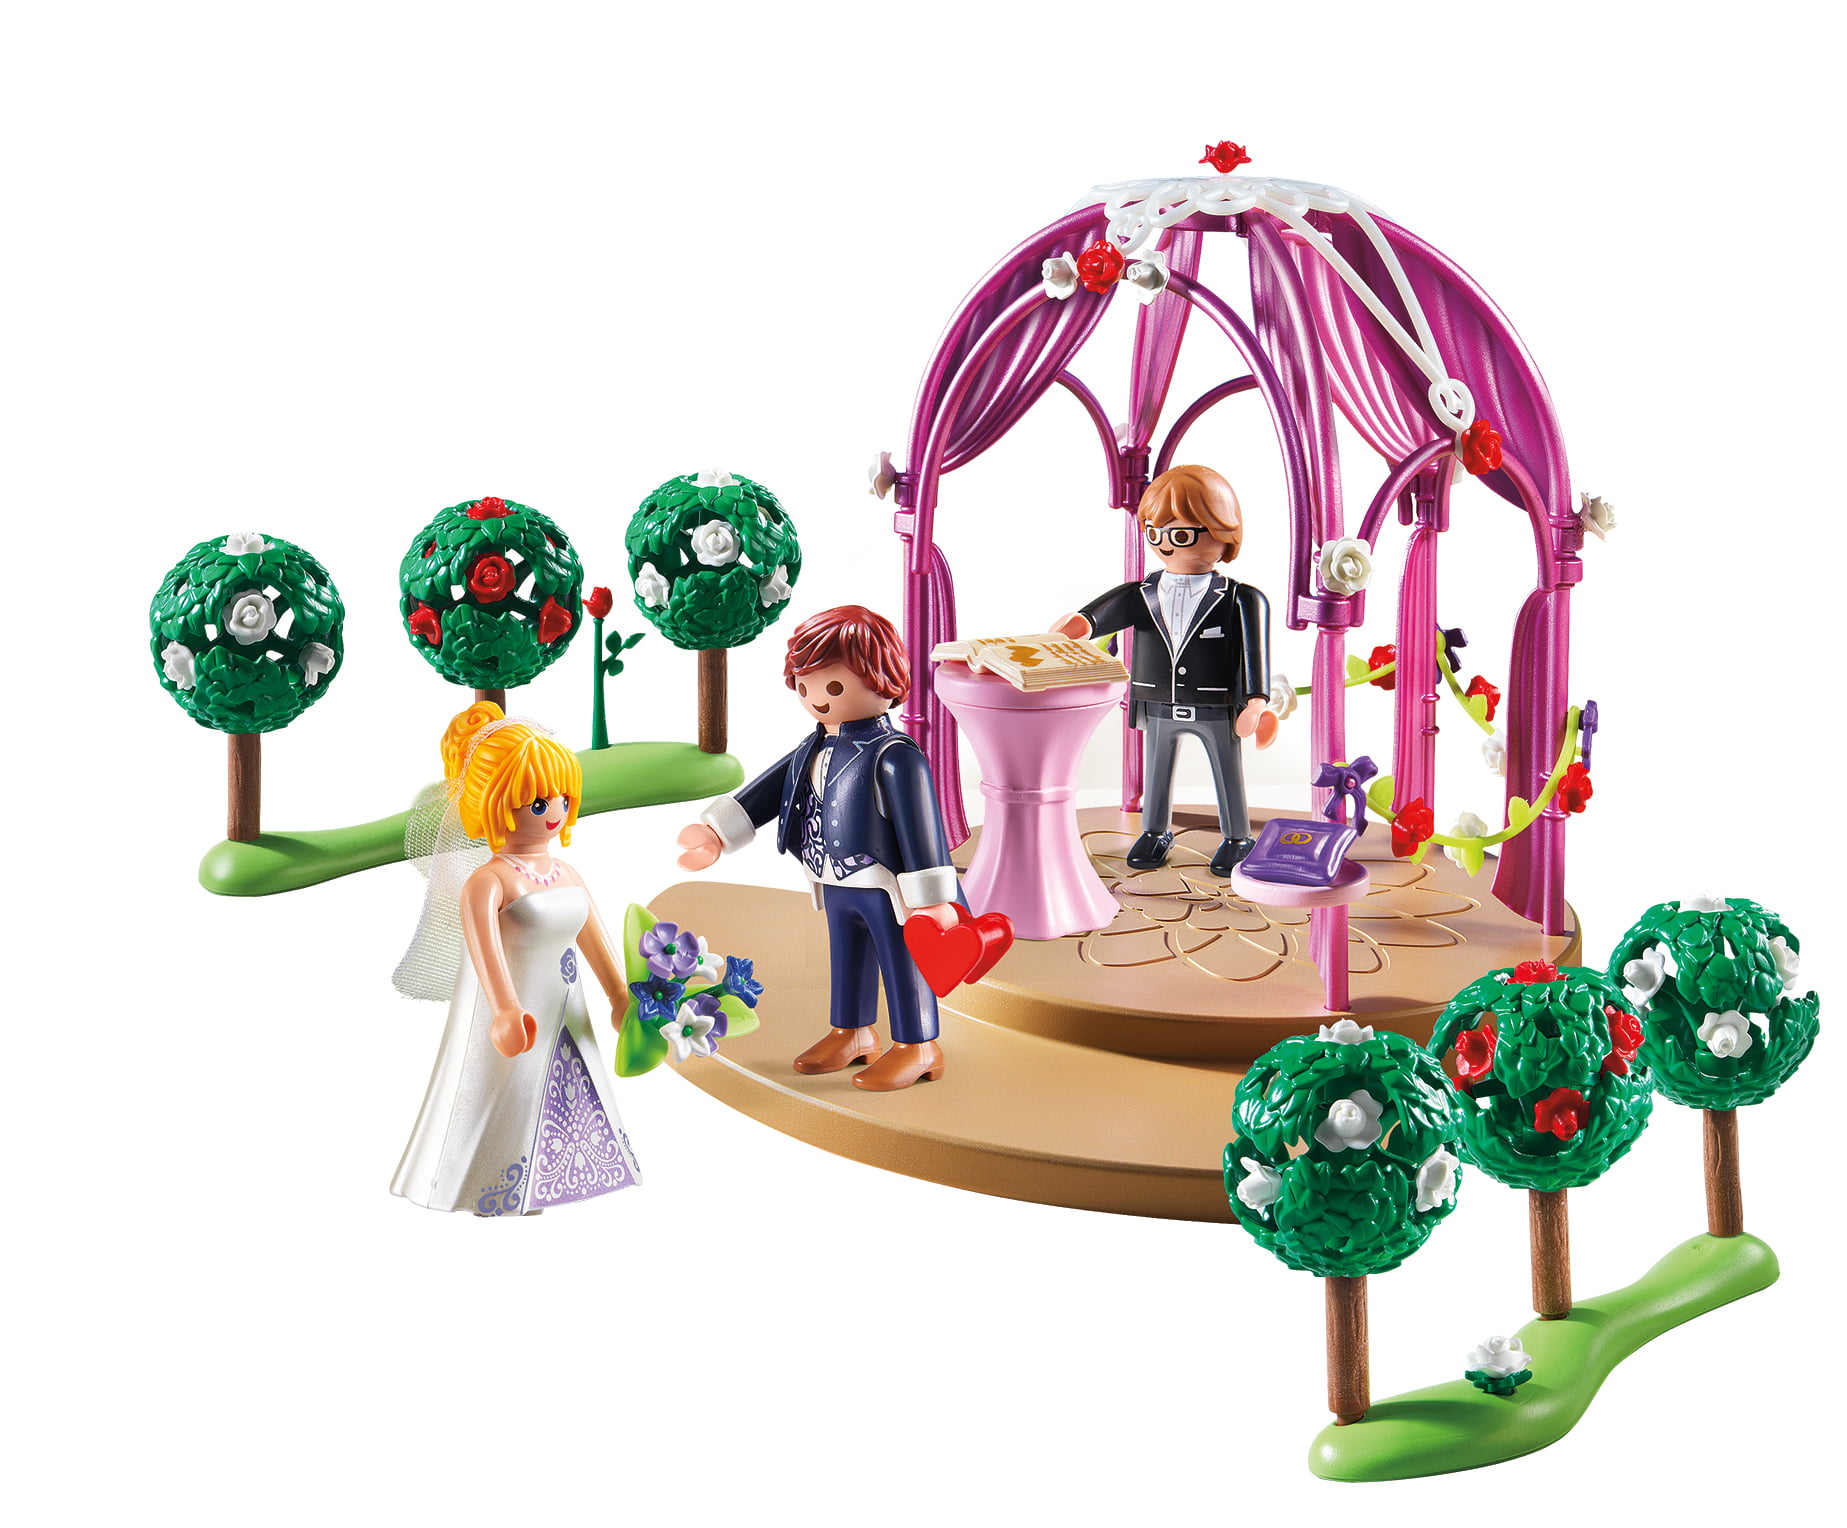 PLAYMOBIL WEDDING CELEBRATION - Toys Club